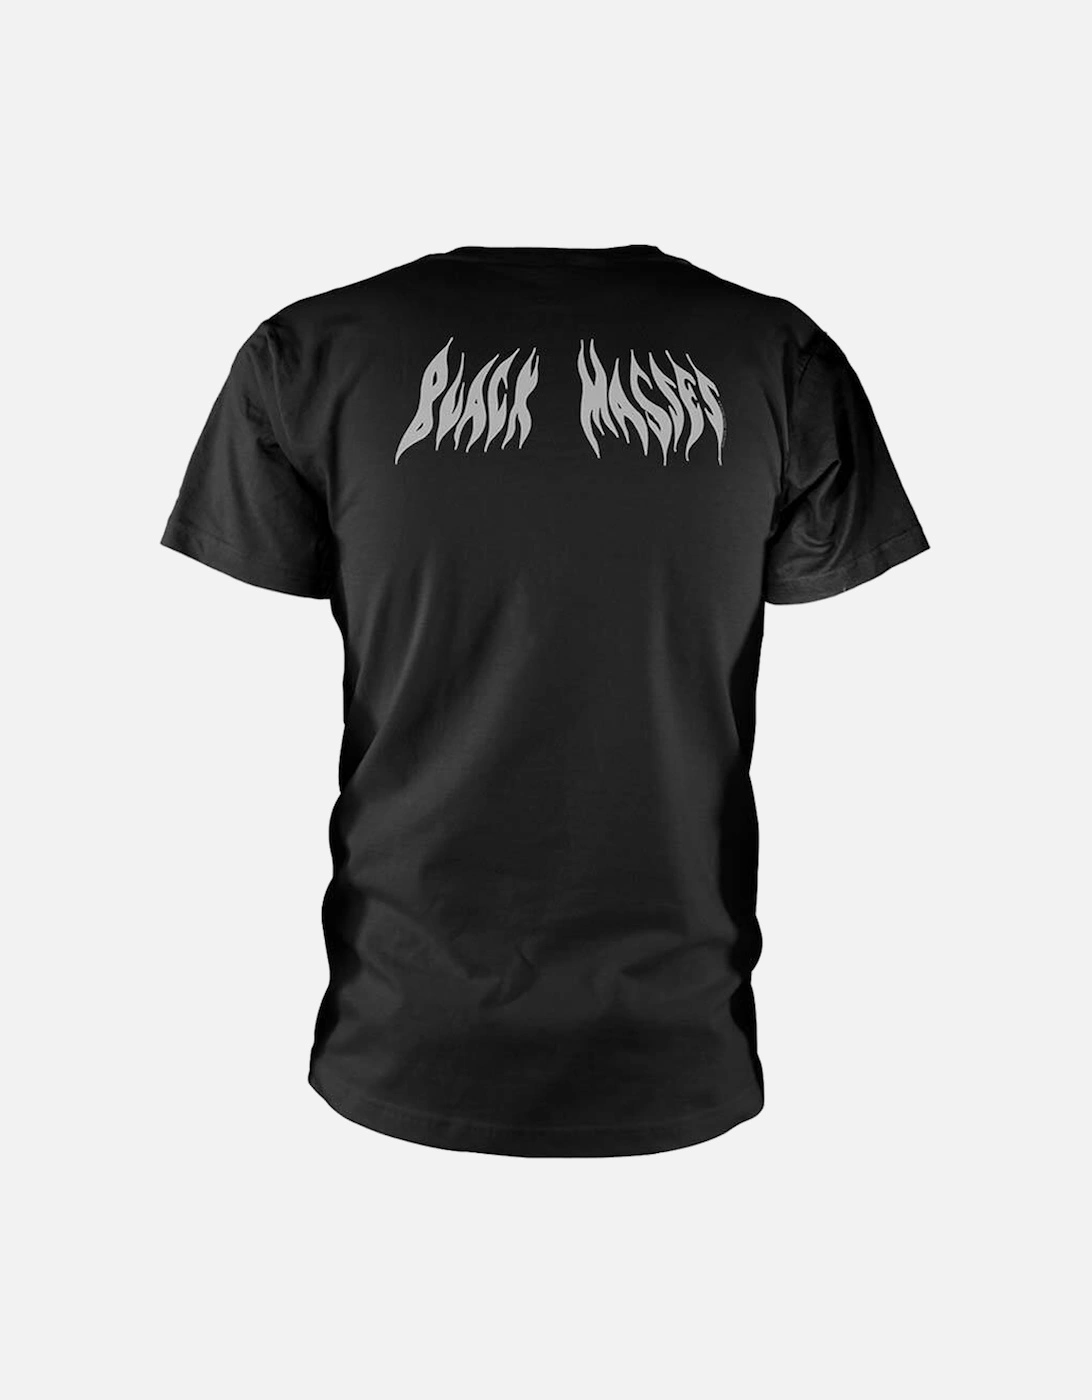 Unisex Adult Black Masses T-Shirt